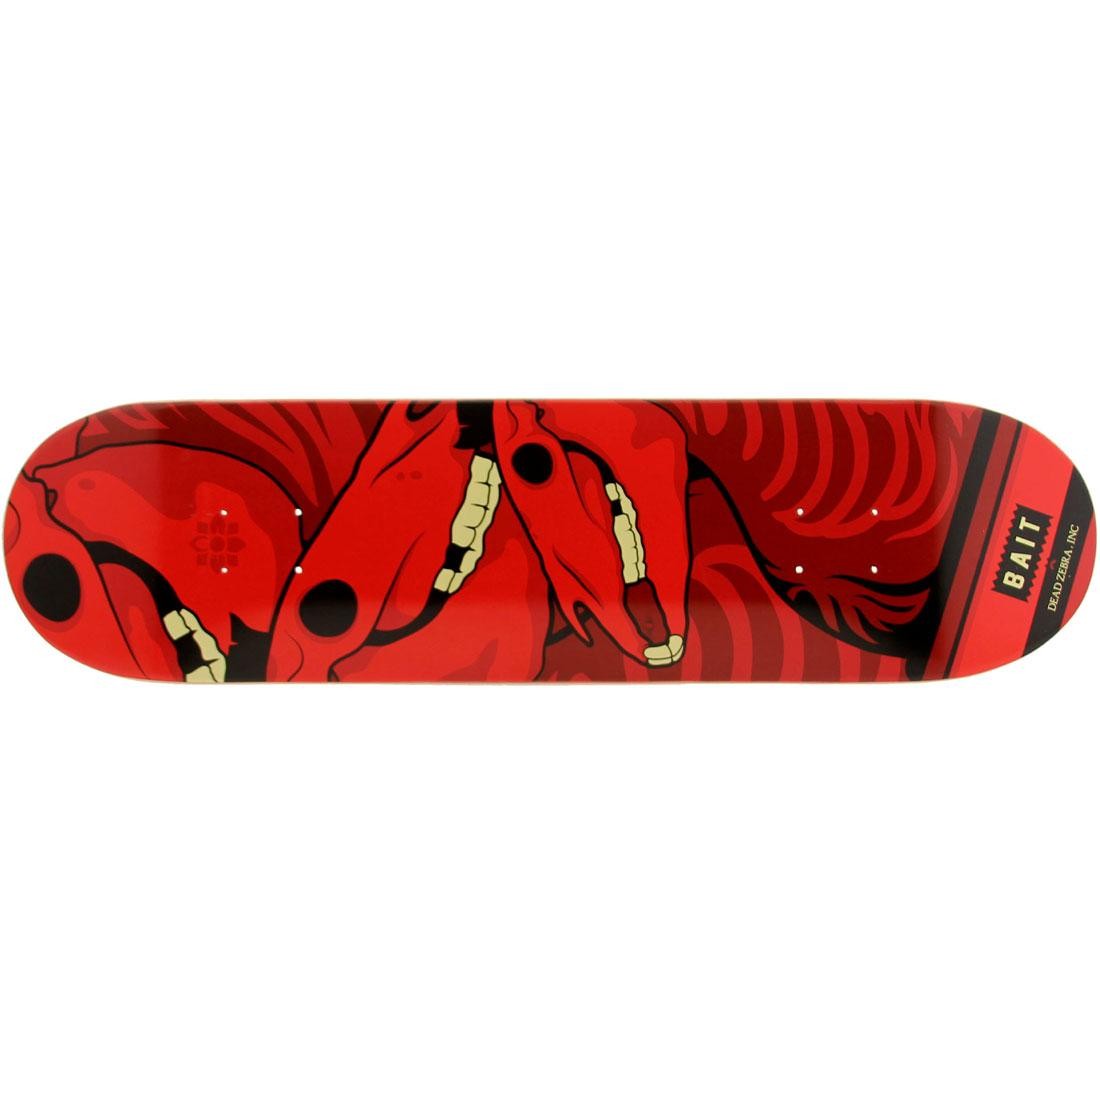 BAIT x Dead Zebra The Last Knight Skateboard Deck (red / purple) - BAIT SDCC Exclusive